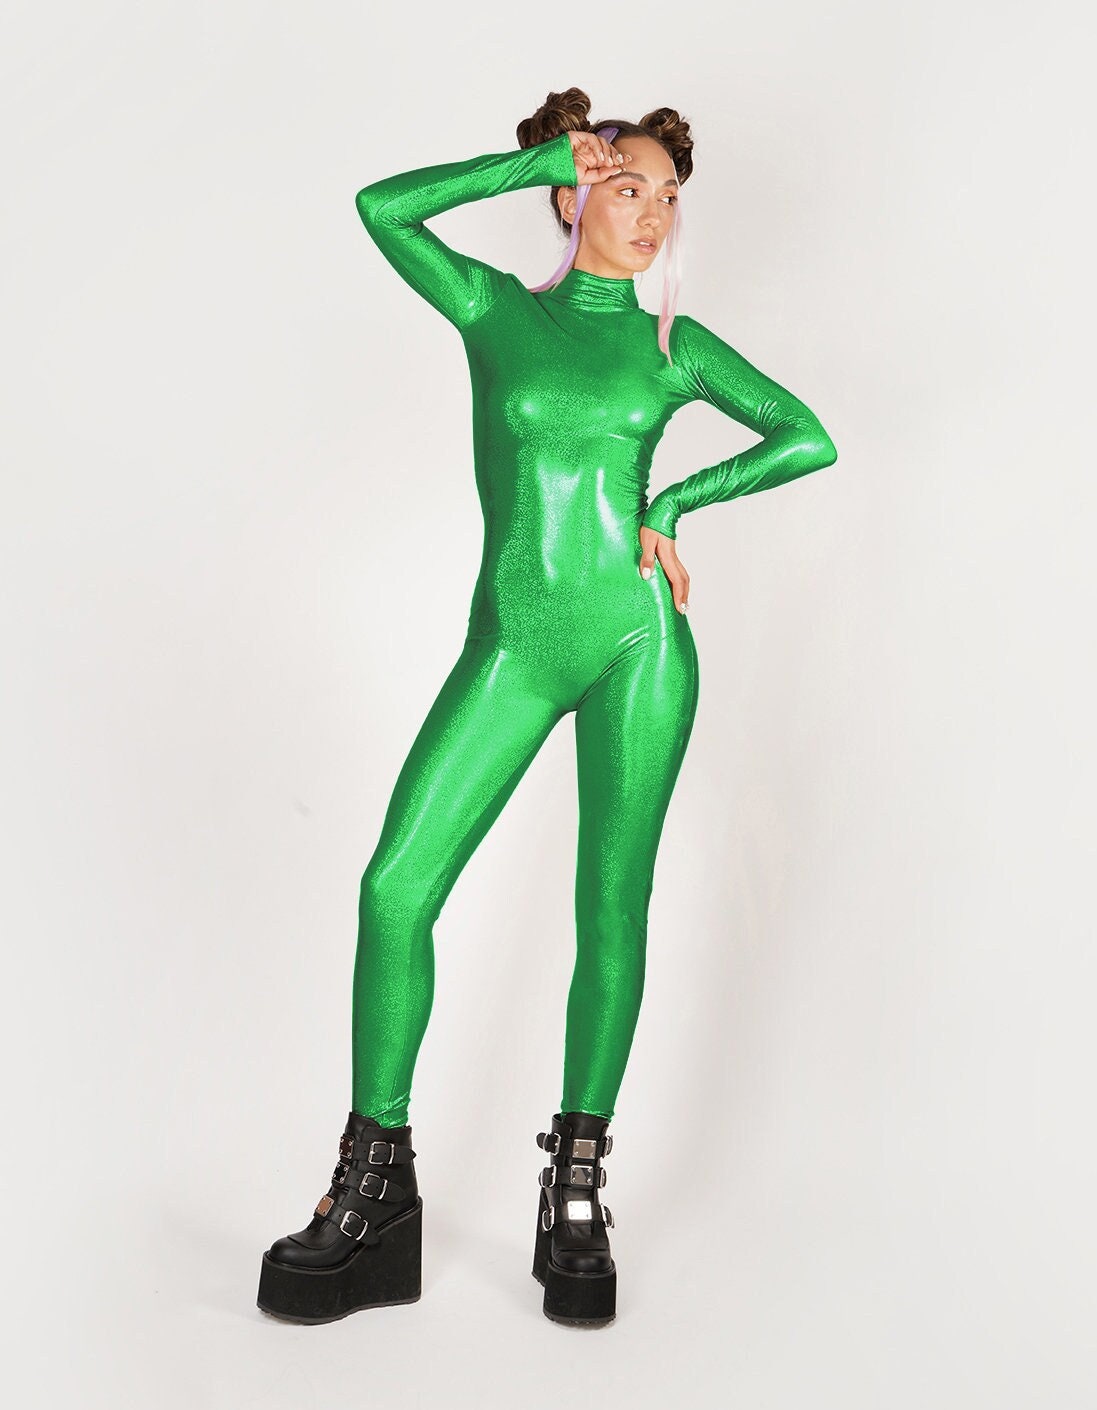 Hologram Iridescent Green Catsuit Spandex Jumpsuit Unitard Bodysuit  Mystique Metallic Festival Costume Size S M L XL -  Ireland